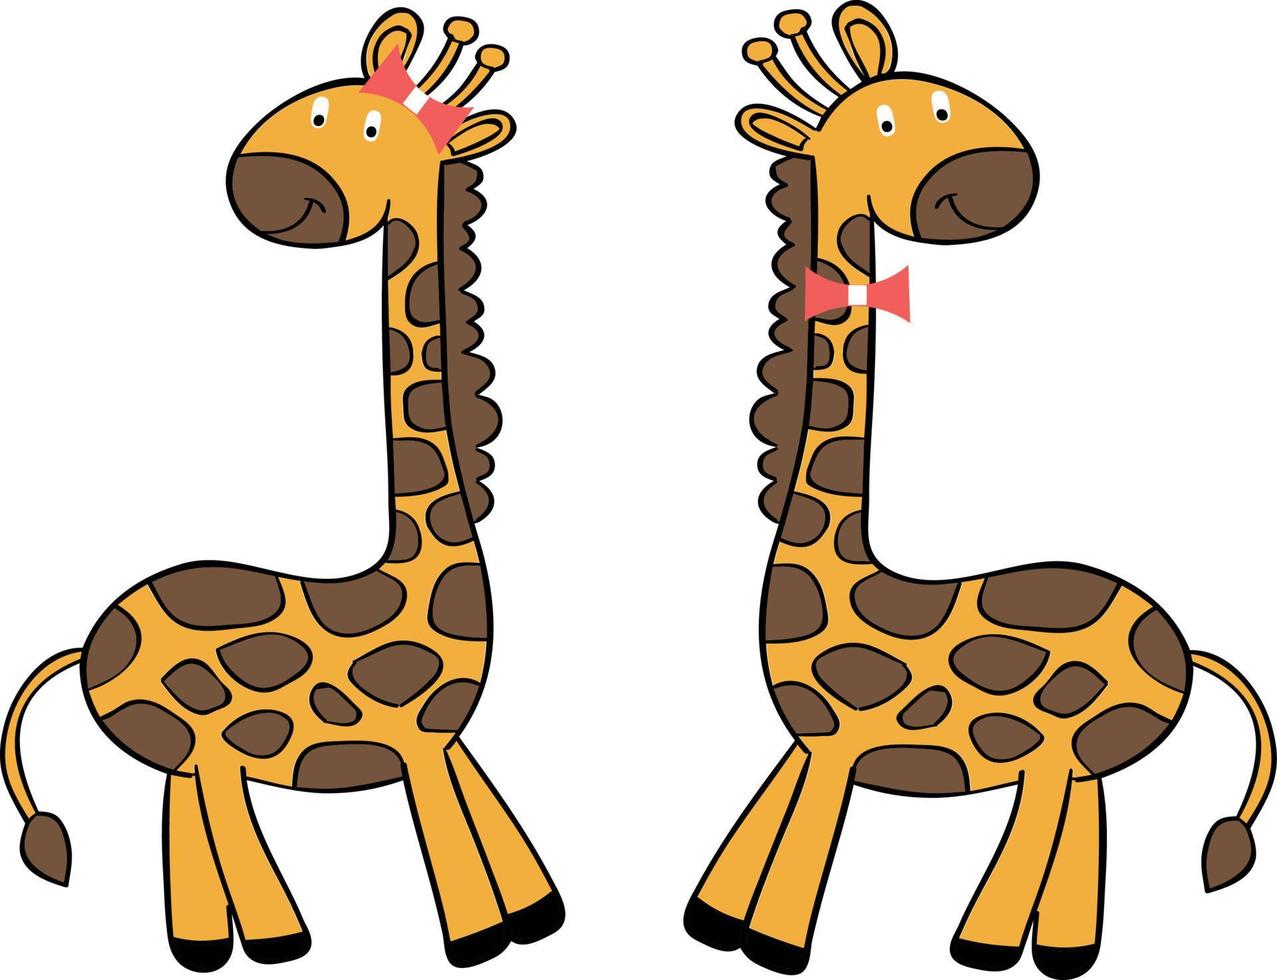 Giraffe animal africa yellow in brown spots  illustration. vector